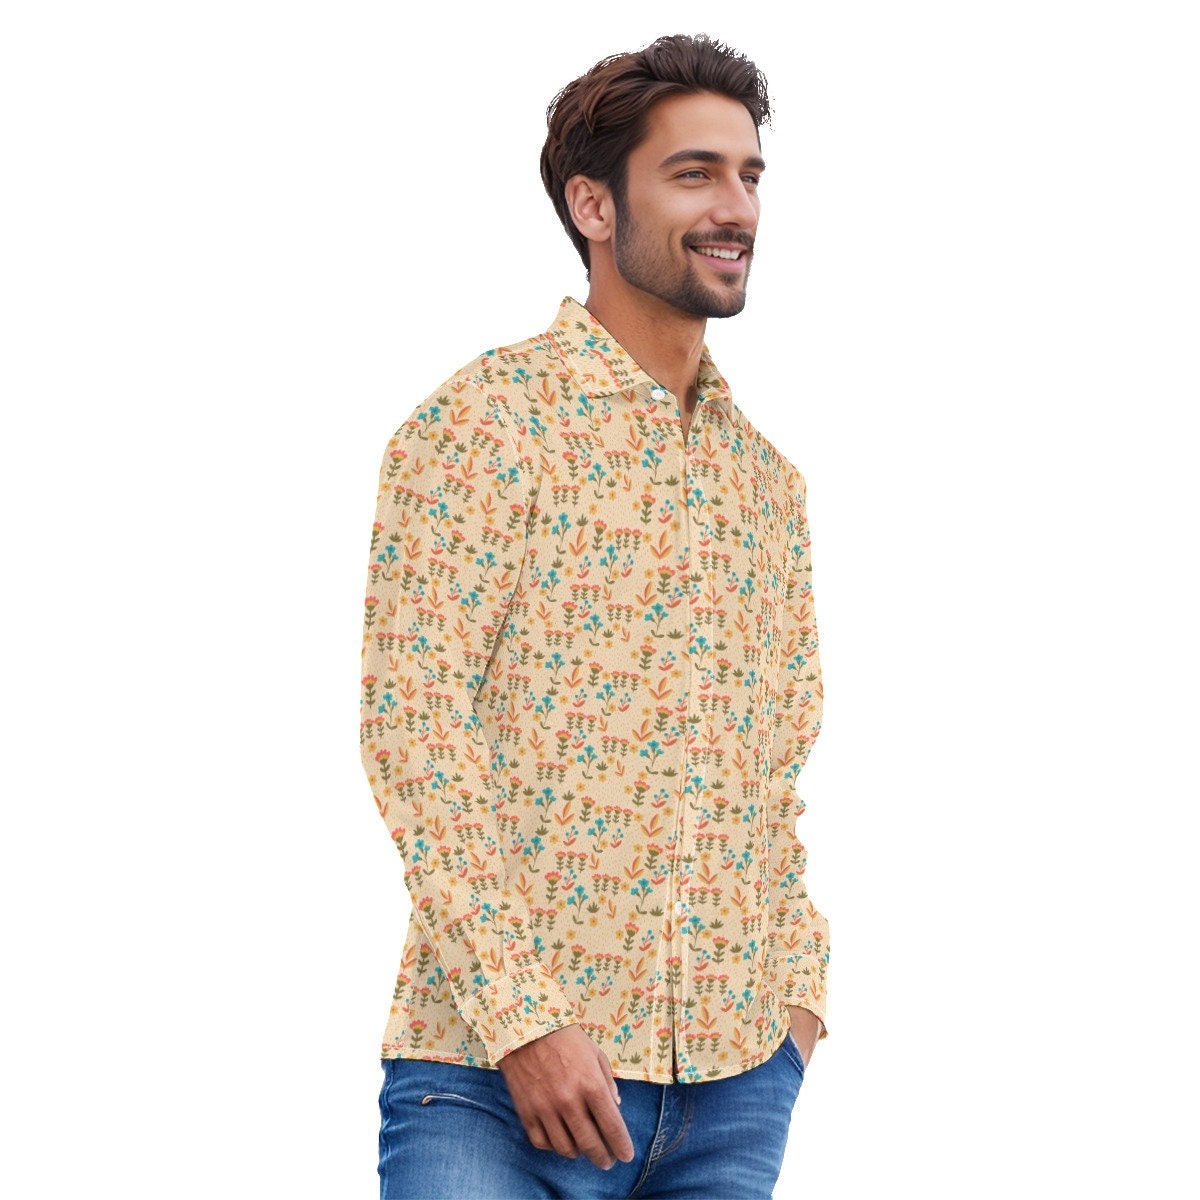 Vintage 70s style shirt, Beige Shirt, Floral Shirt Men, 70s clothing Men, Retro Shirt Men,Hippie Shirt Men, 70s Shirt Men,70s inspired Shirt